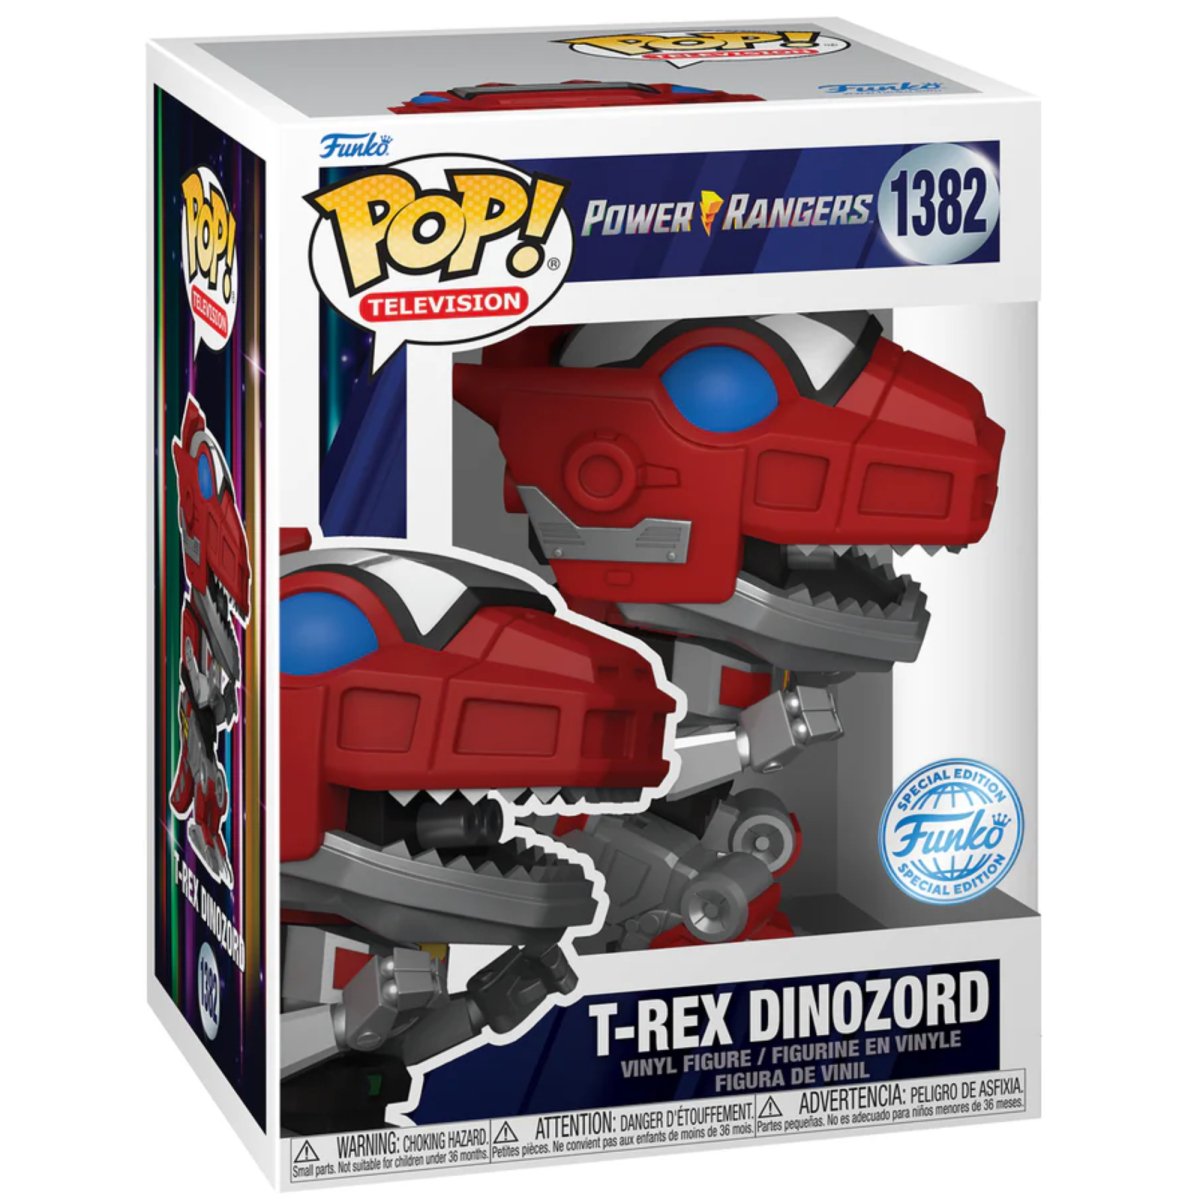 Power Rangers - T-Rex Dinozord (Special Edition) #1382 - Funko Pop! Vinyl Television - Persona Toys